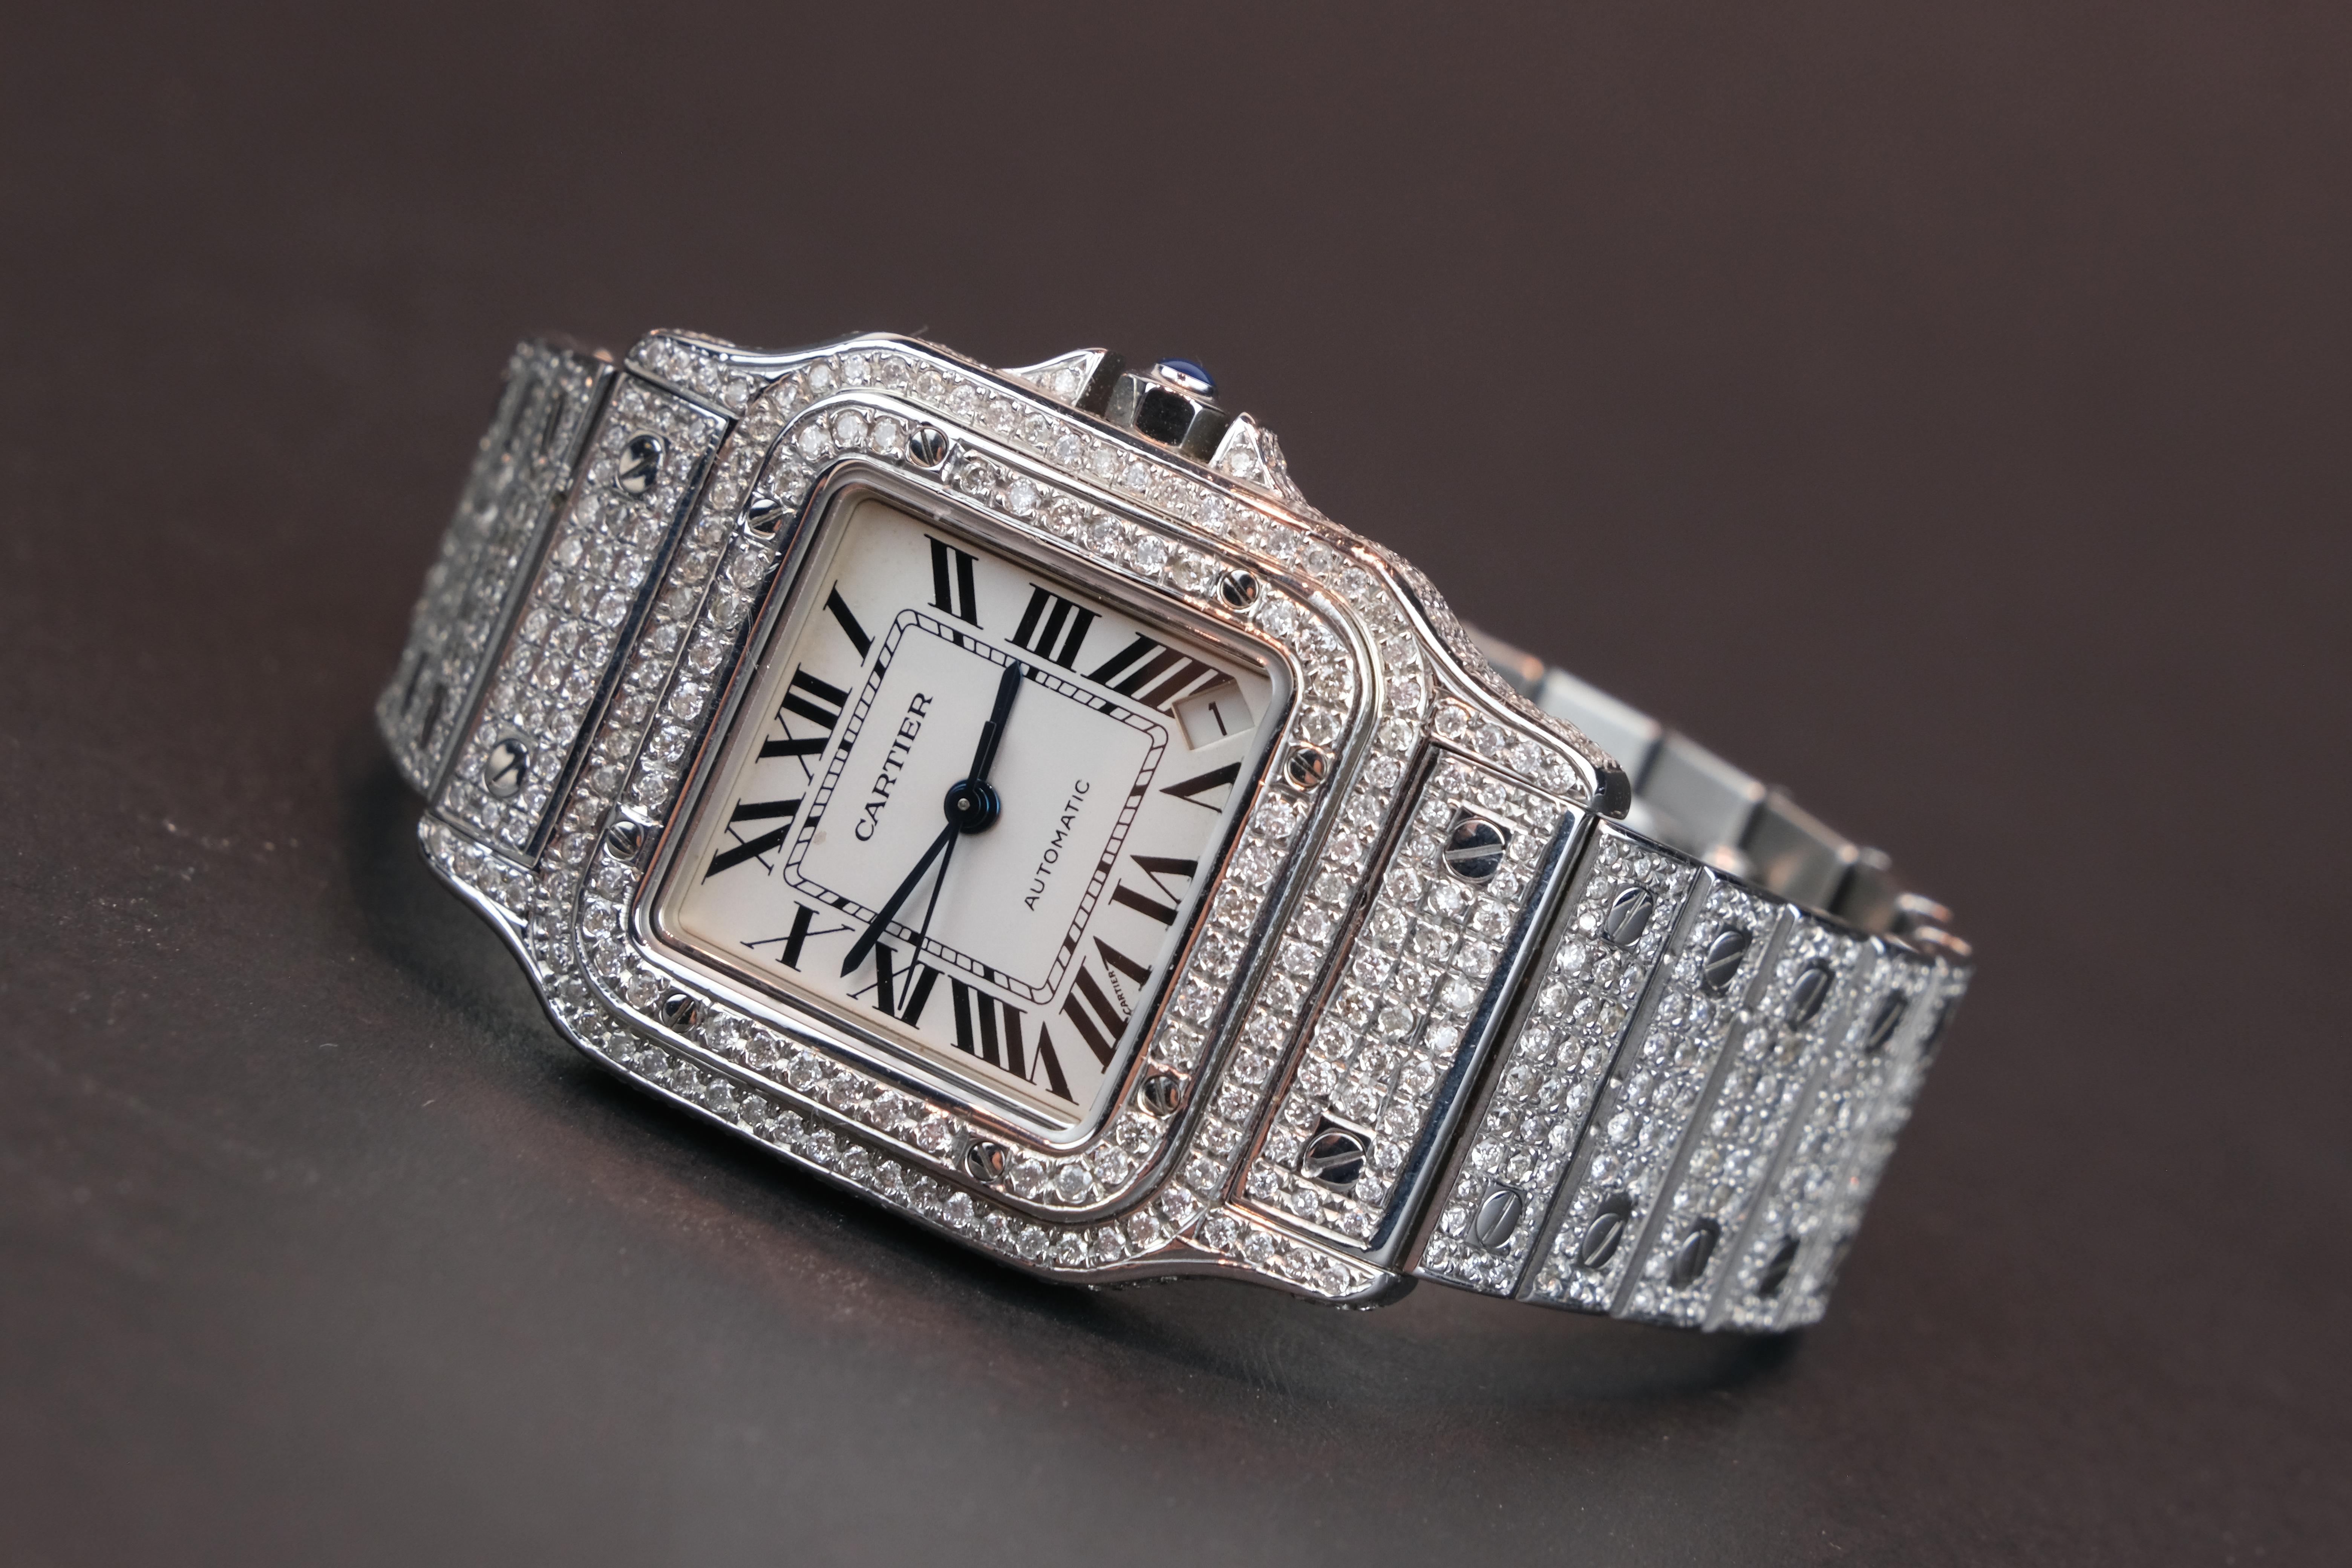 Brilliant Cut Cartier Santos Galbee XL Stainless Steel and 9.47 CTW Diamond Wristwatch